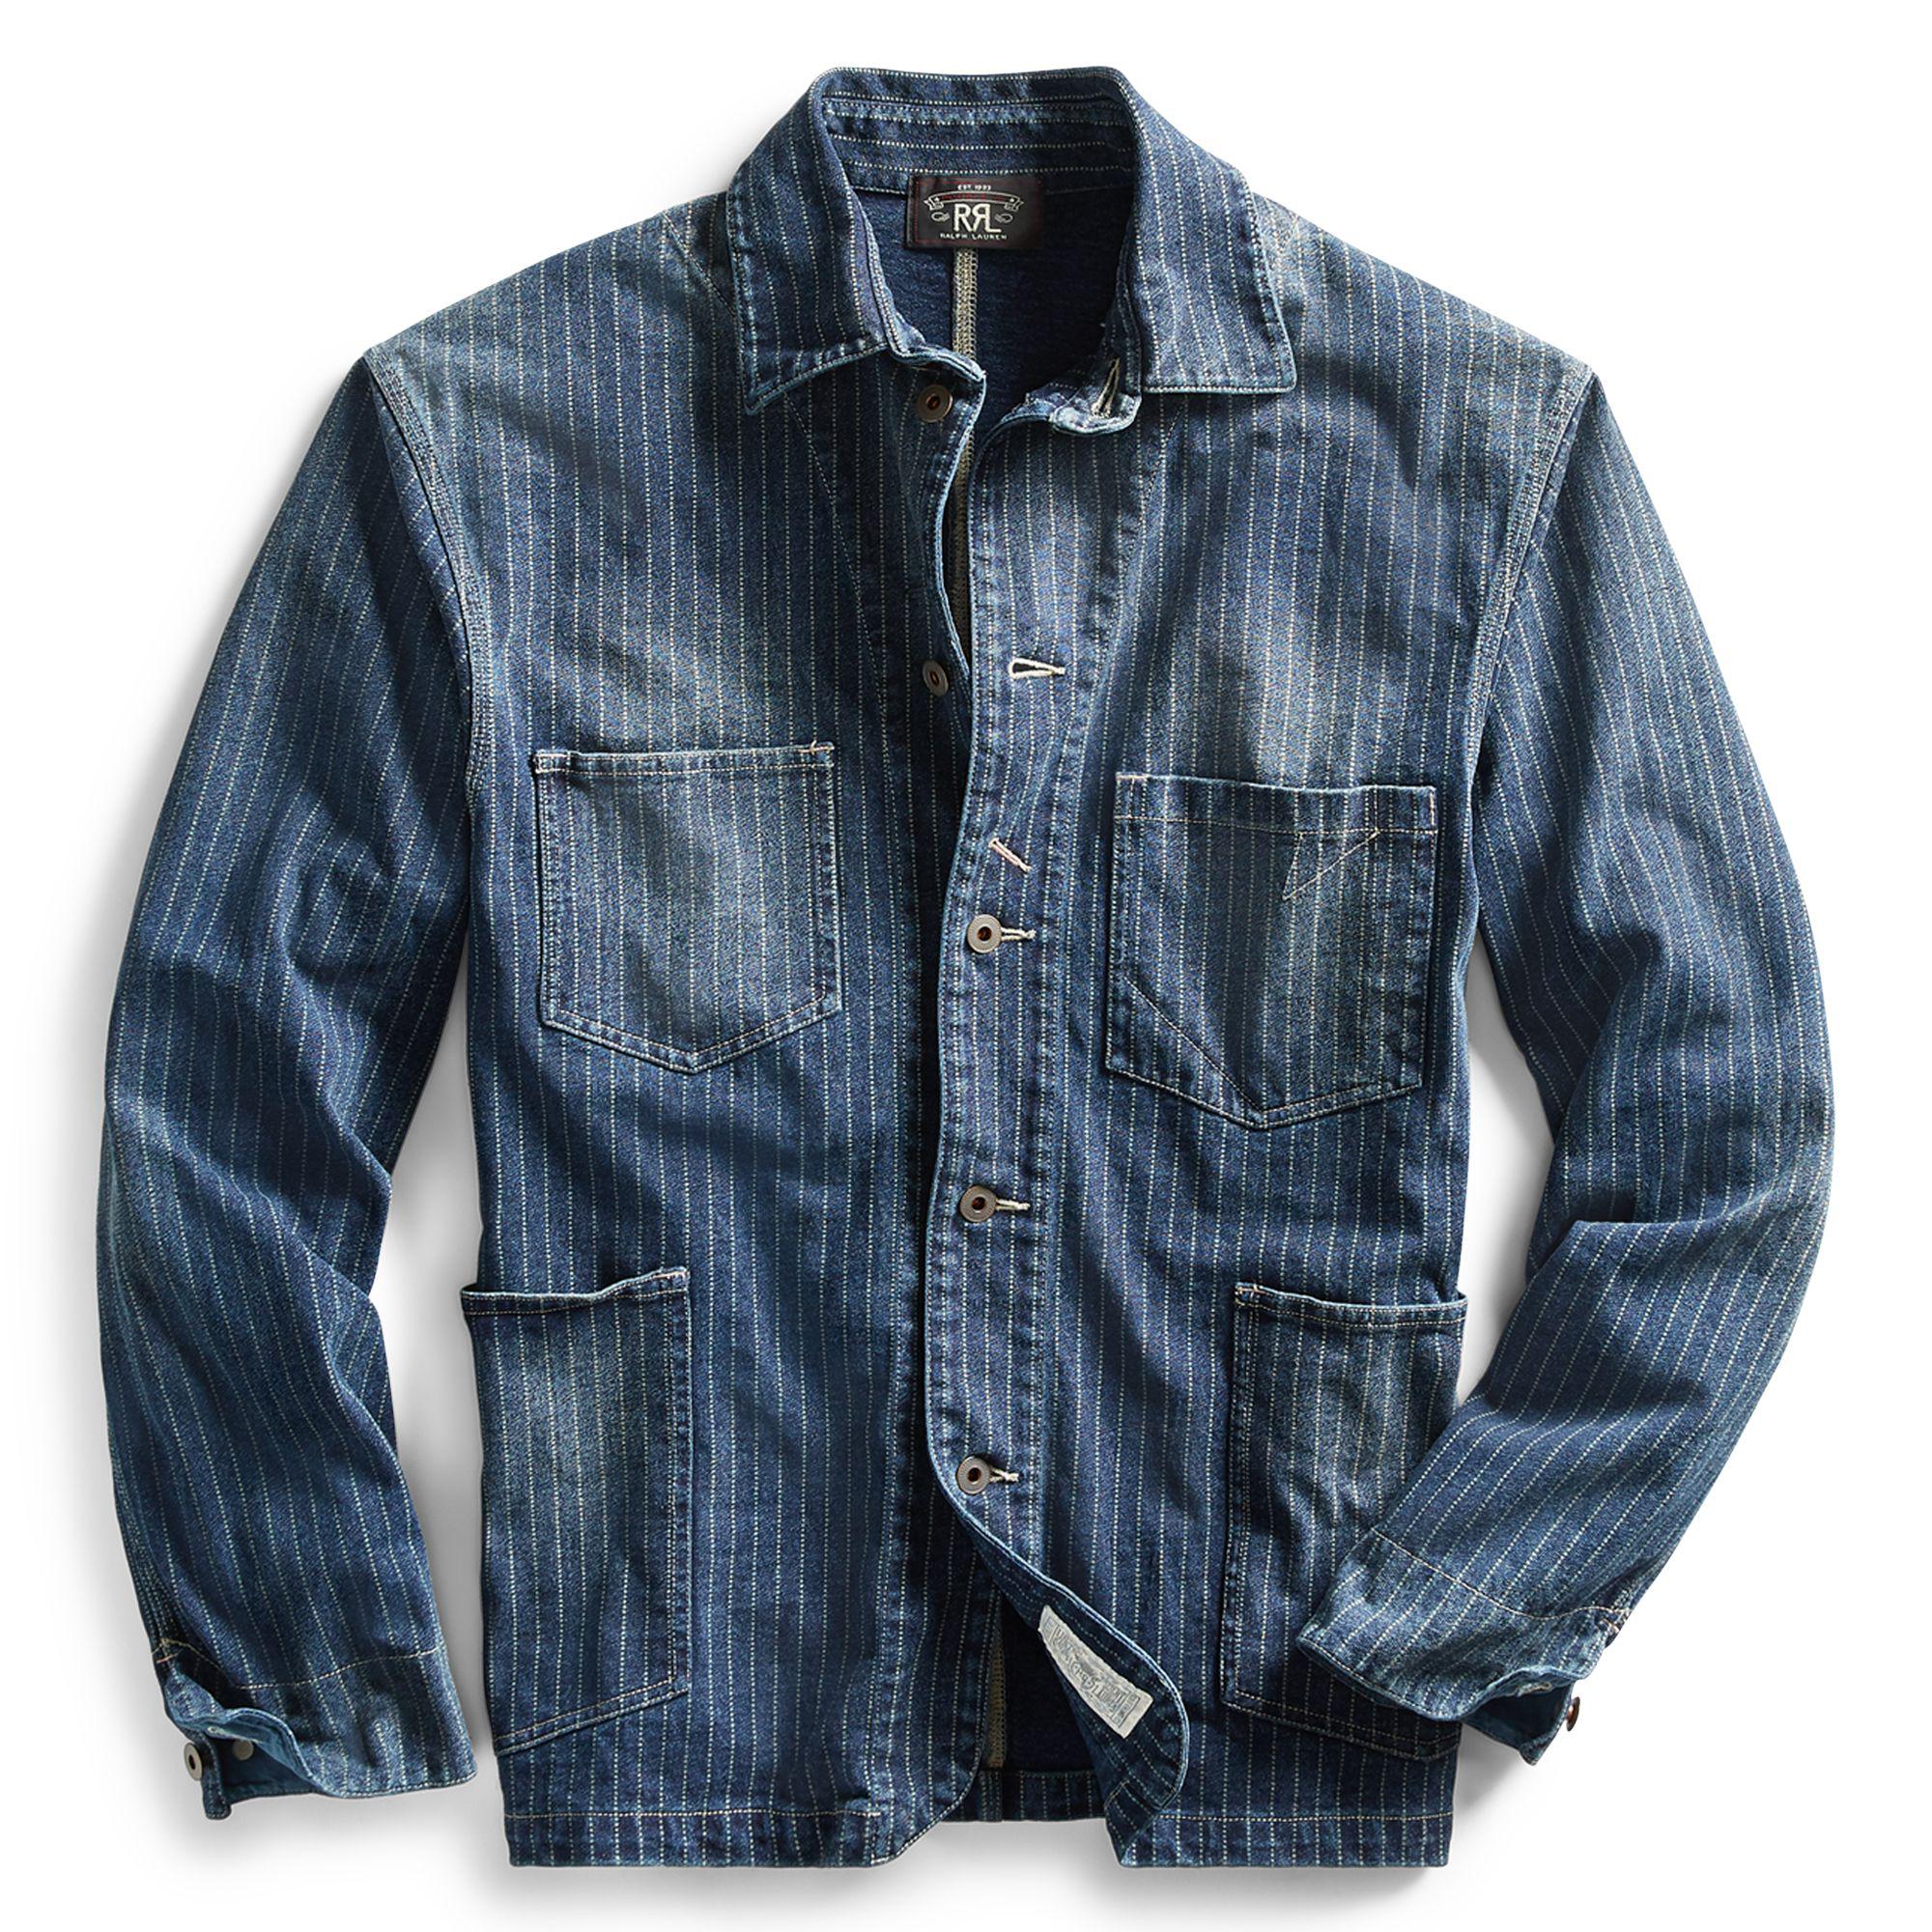 RRL Cotton Indigo Striped Jersey Jacket in Blue for Men - Lyst